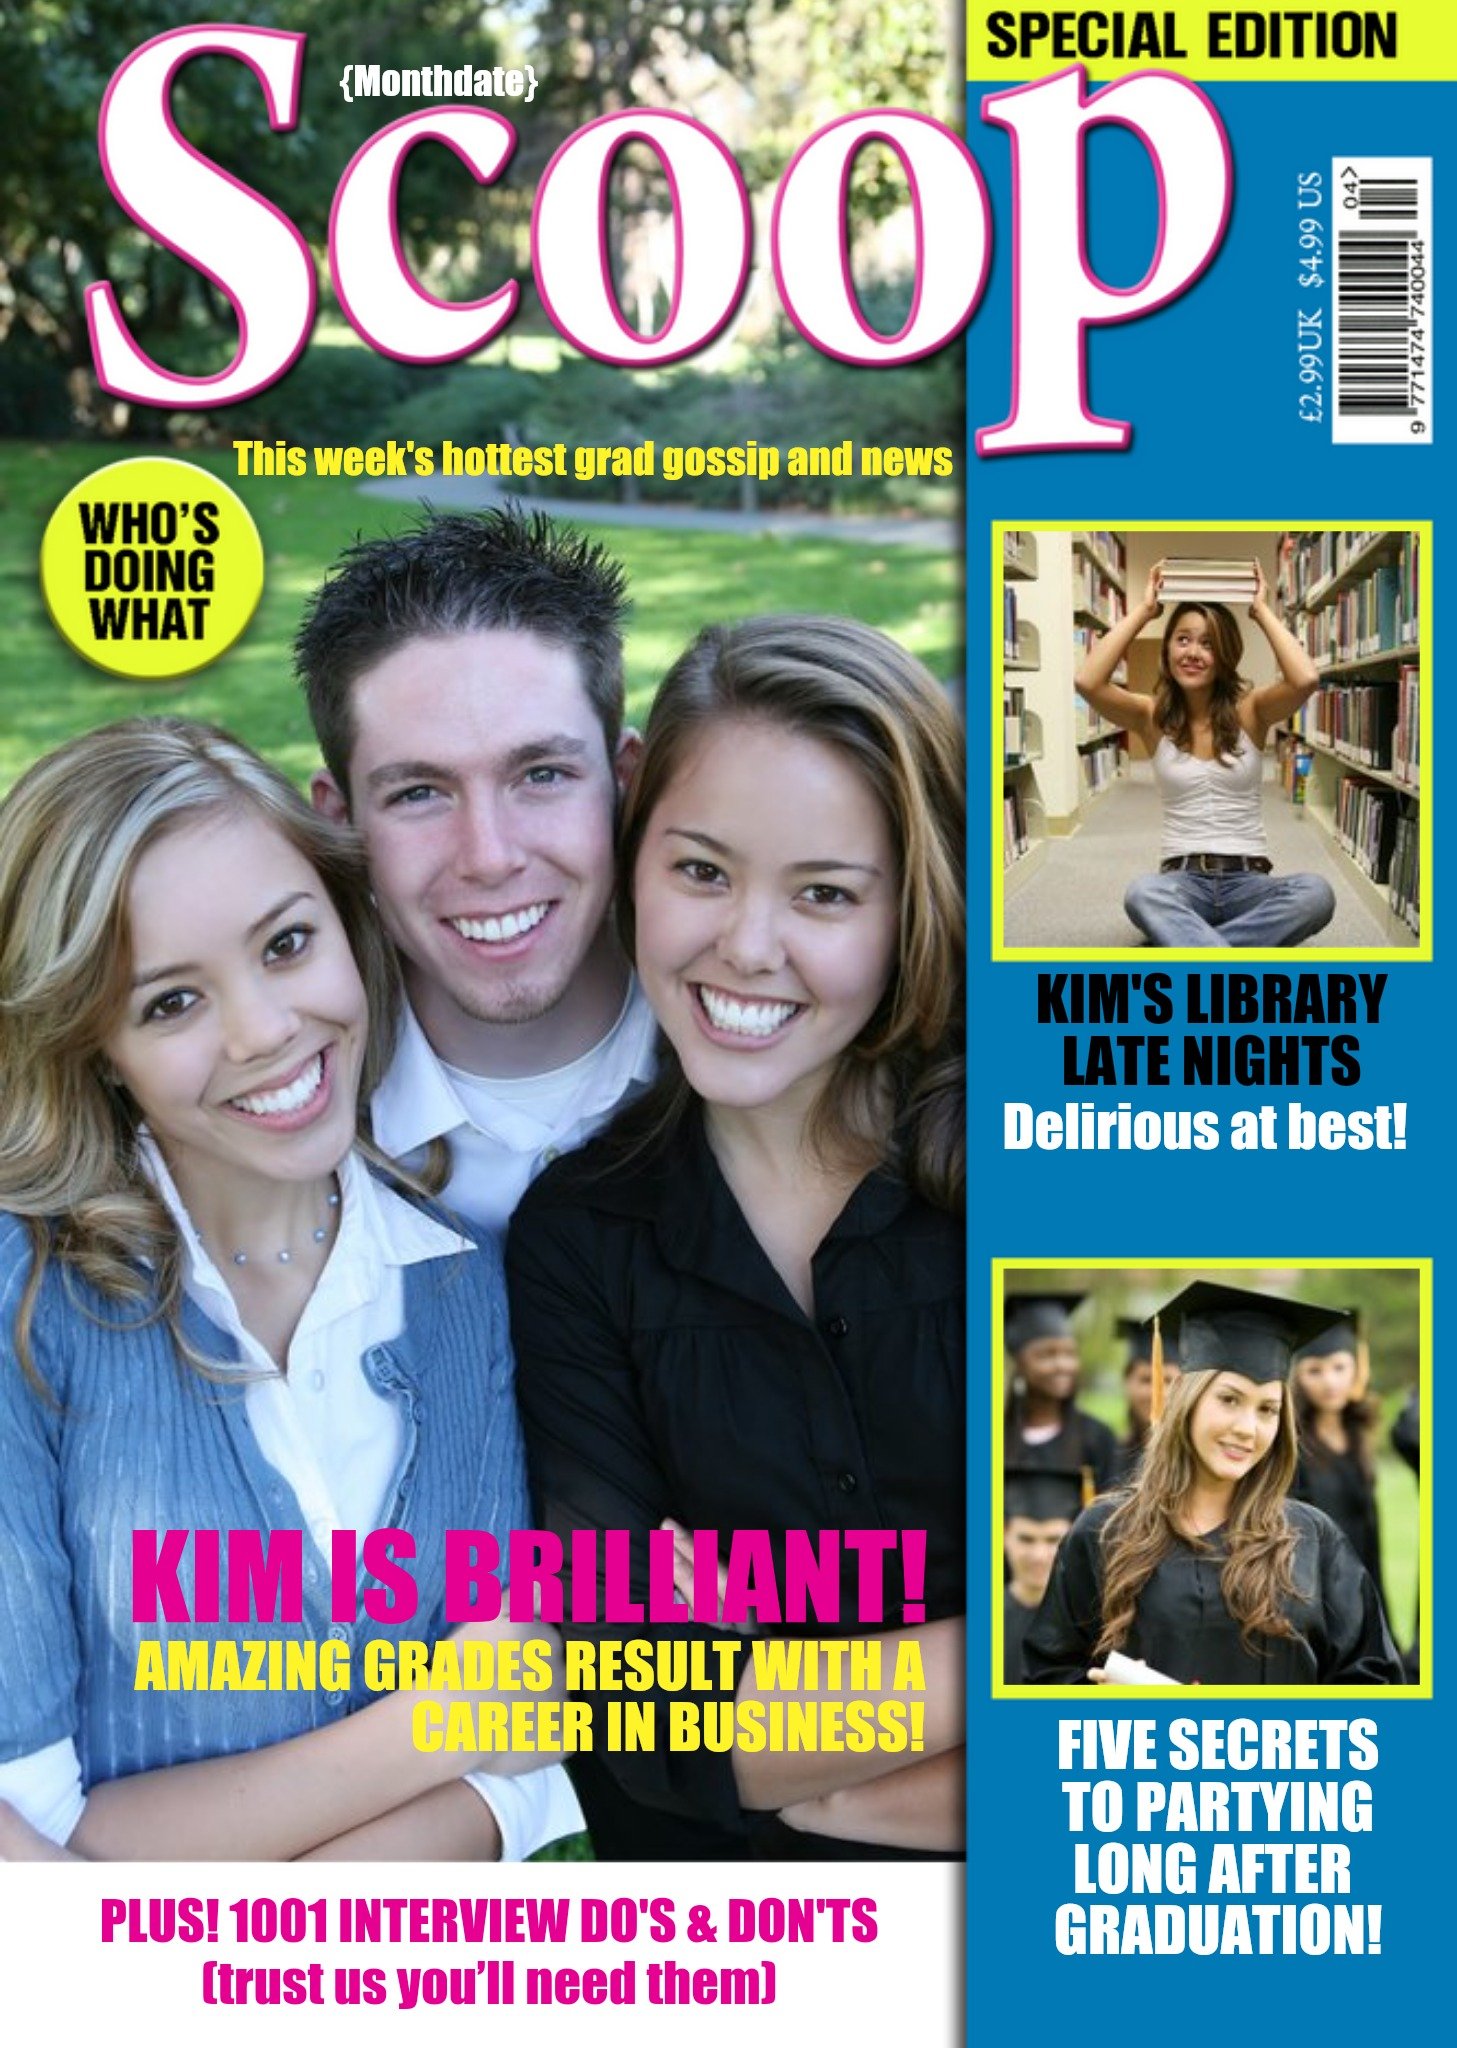 Moonpig Scoop Spoof Gossip Magazine Personalised Photo Upload Graduation Card, Large